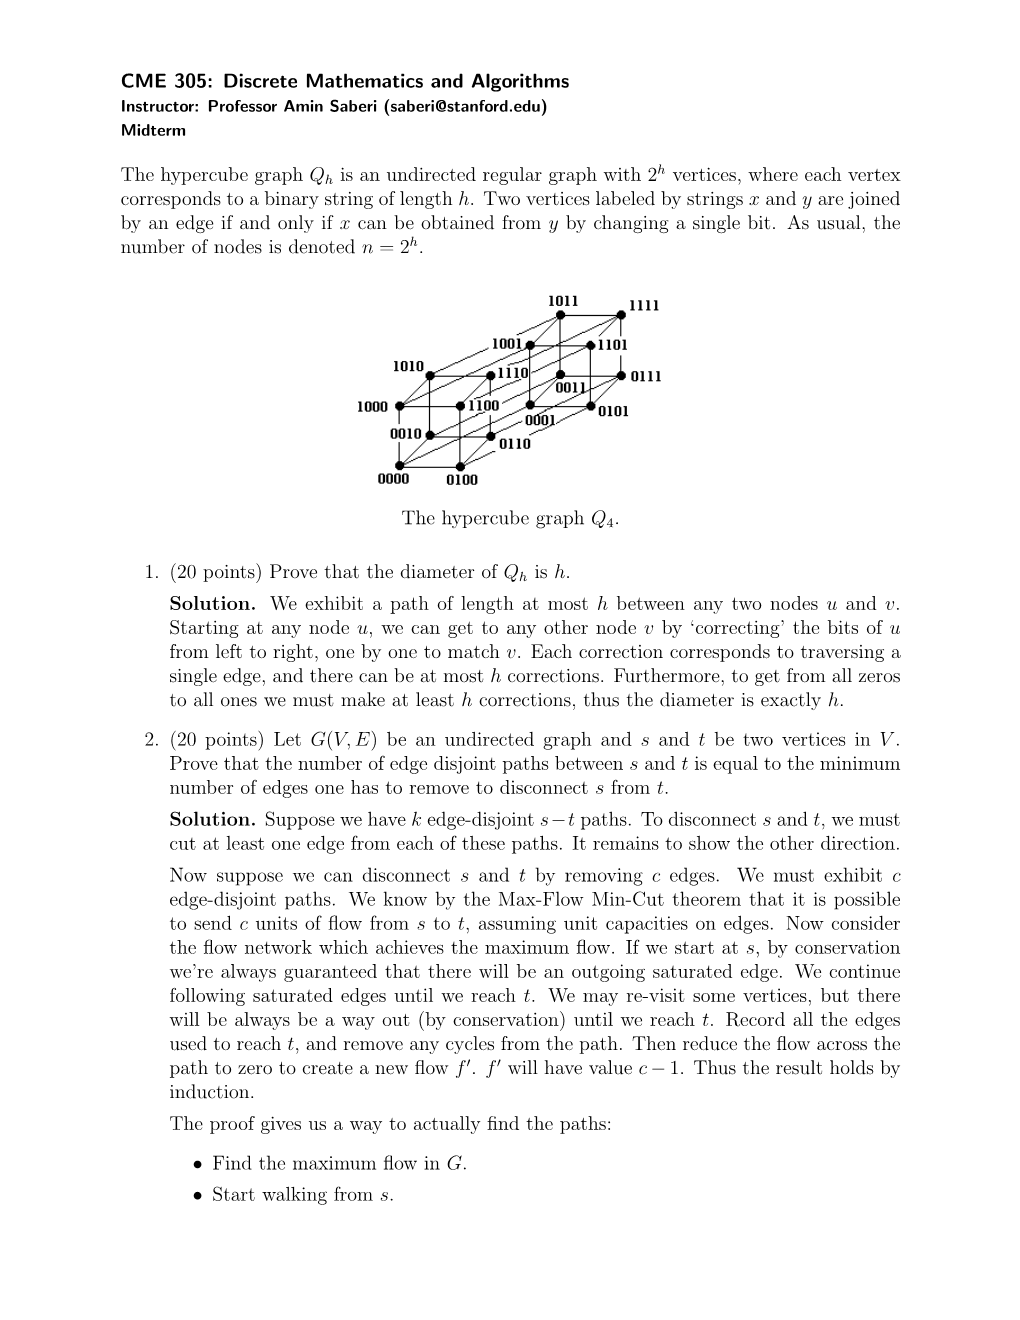 CME 305: Discrete Mathematics and Algorithms the Hypercube Graph